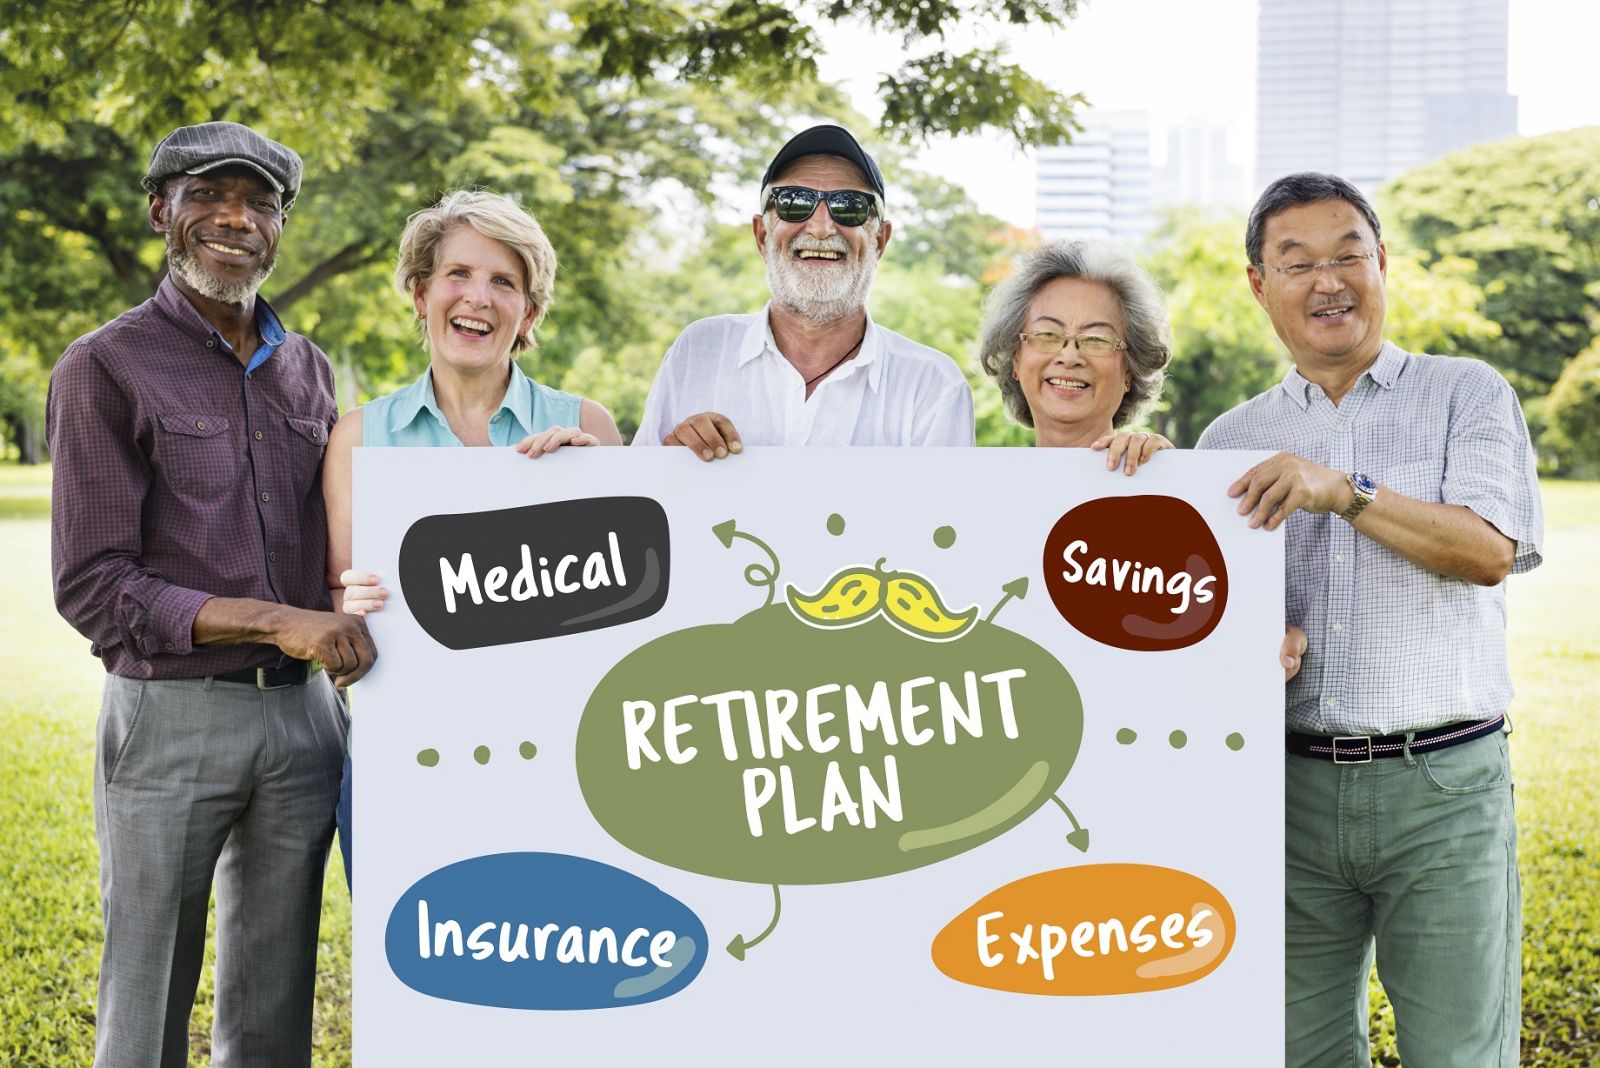 Top 5 Retirement Plan Options